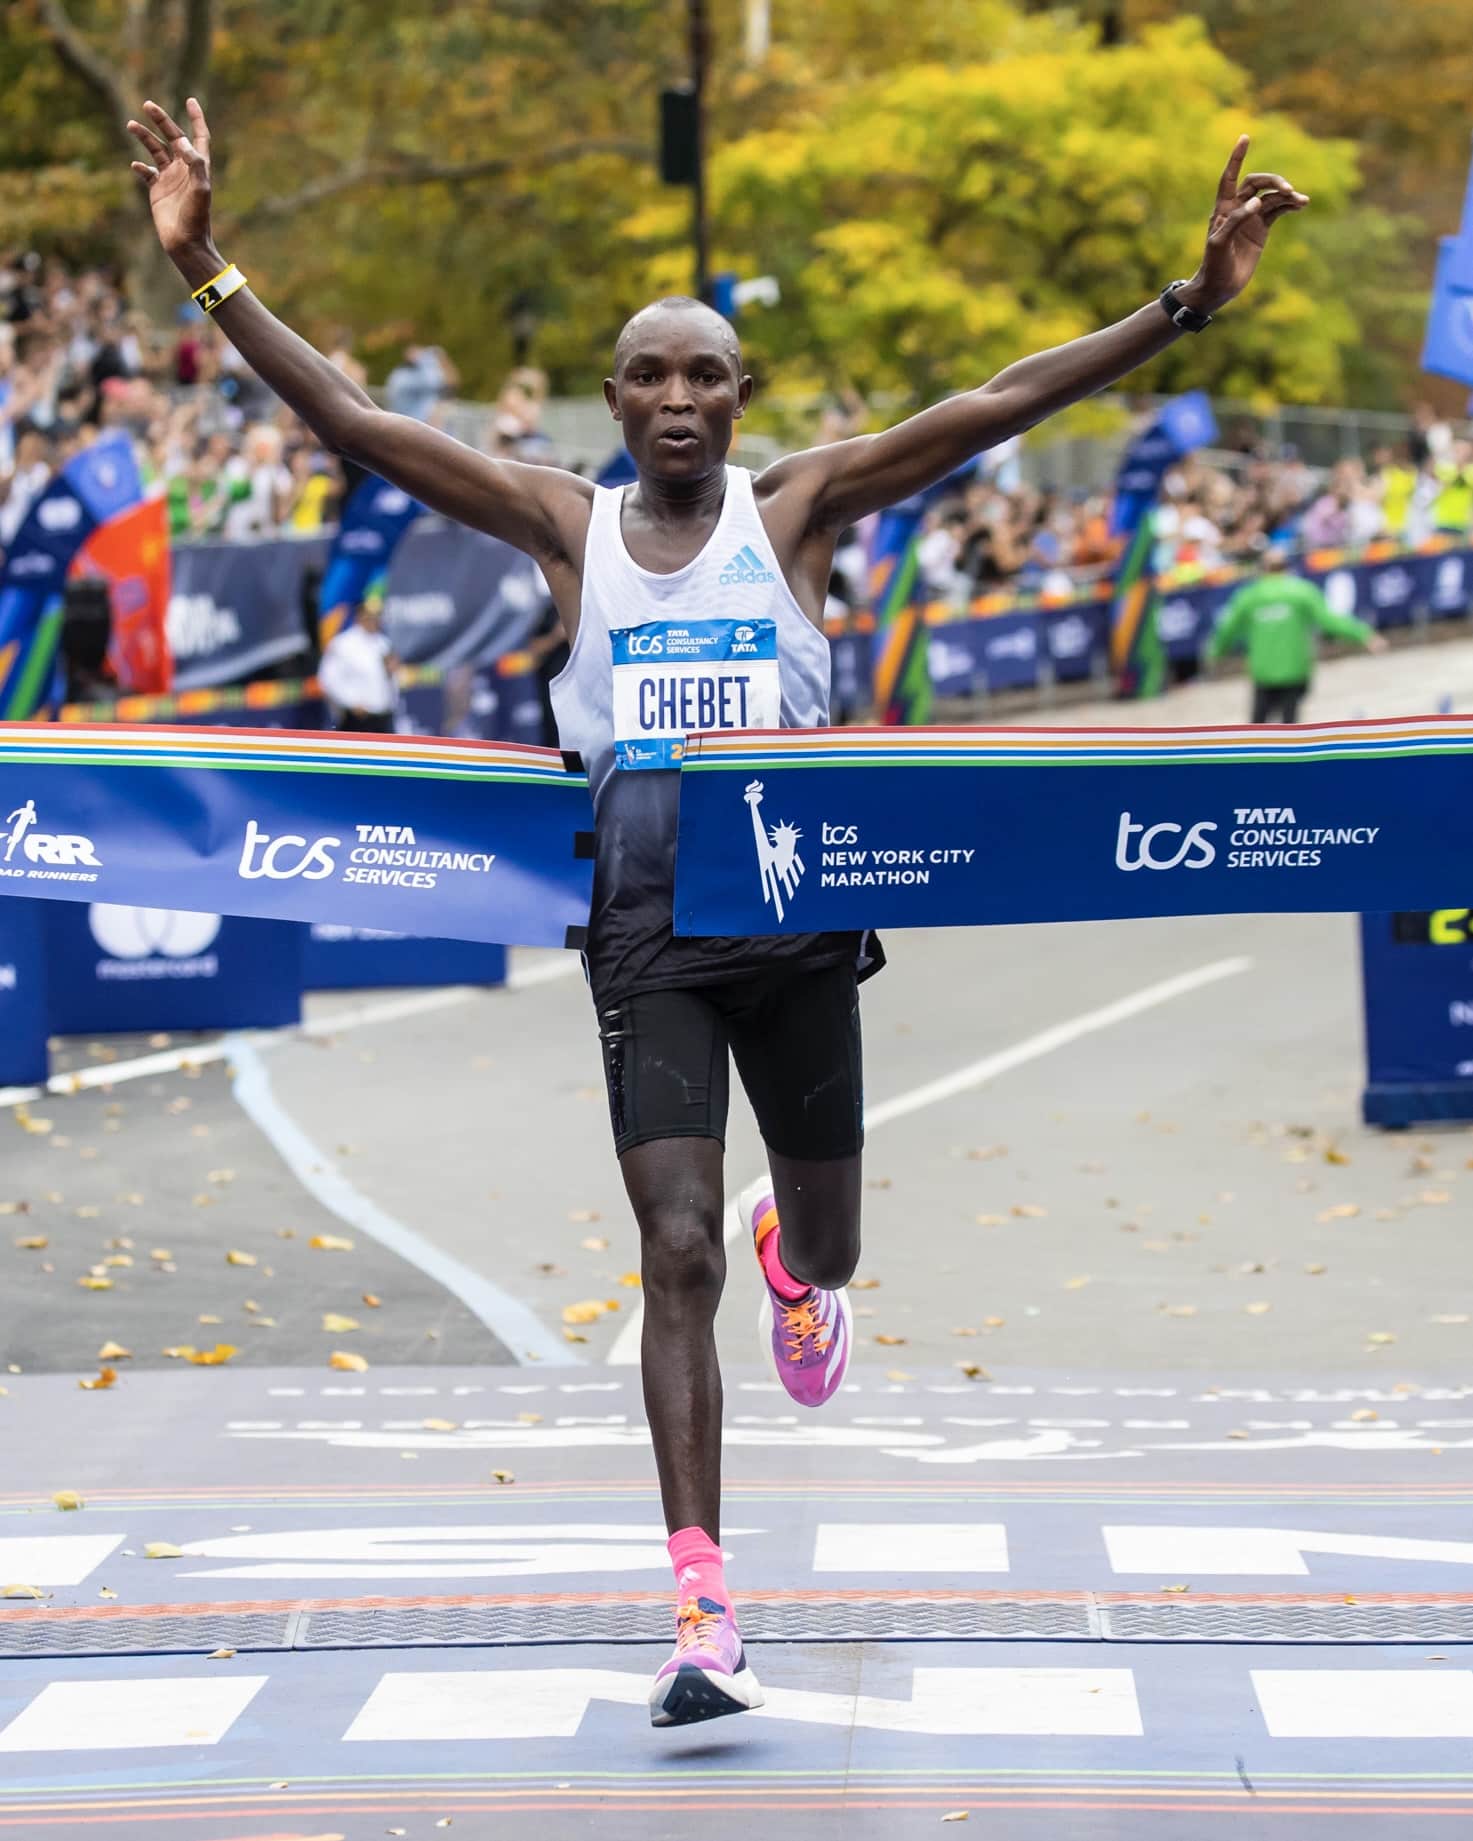 Chebet used Boston Marathon’s win as preparation for New York Kenyan